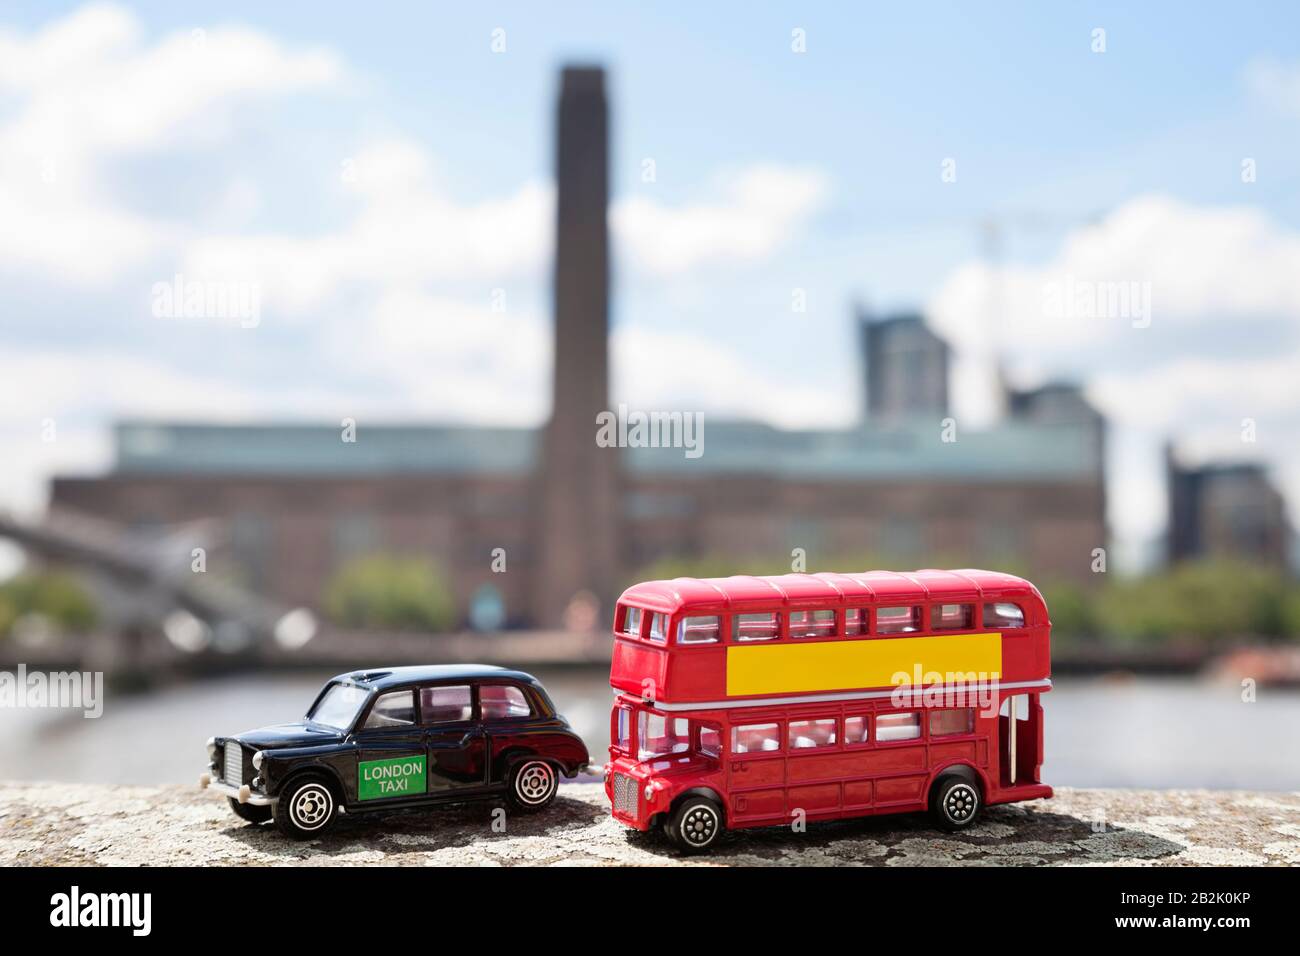 Figurines of London public transports Stock Photo